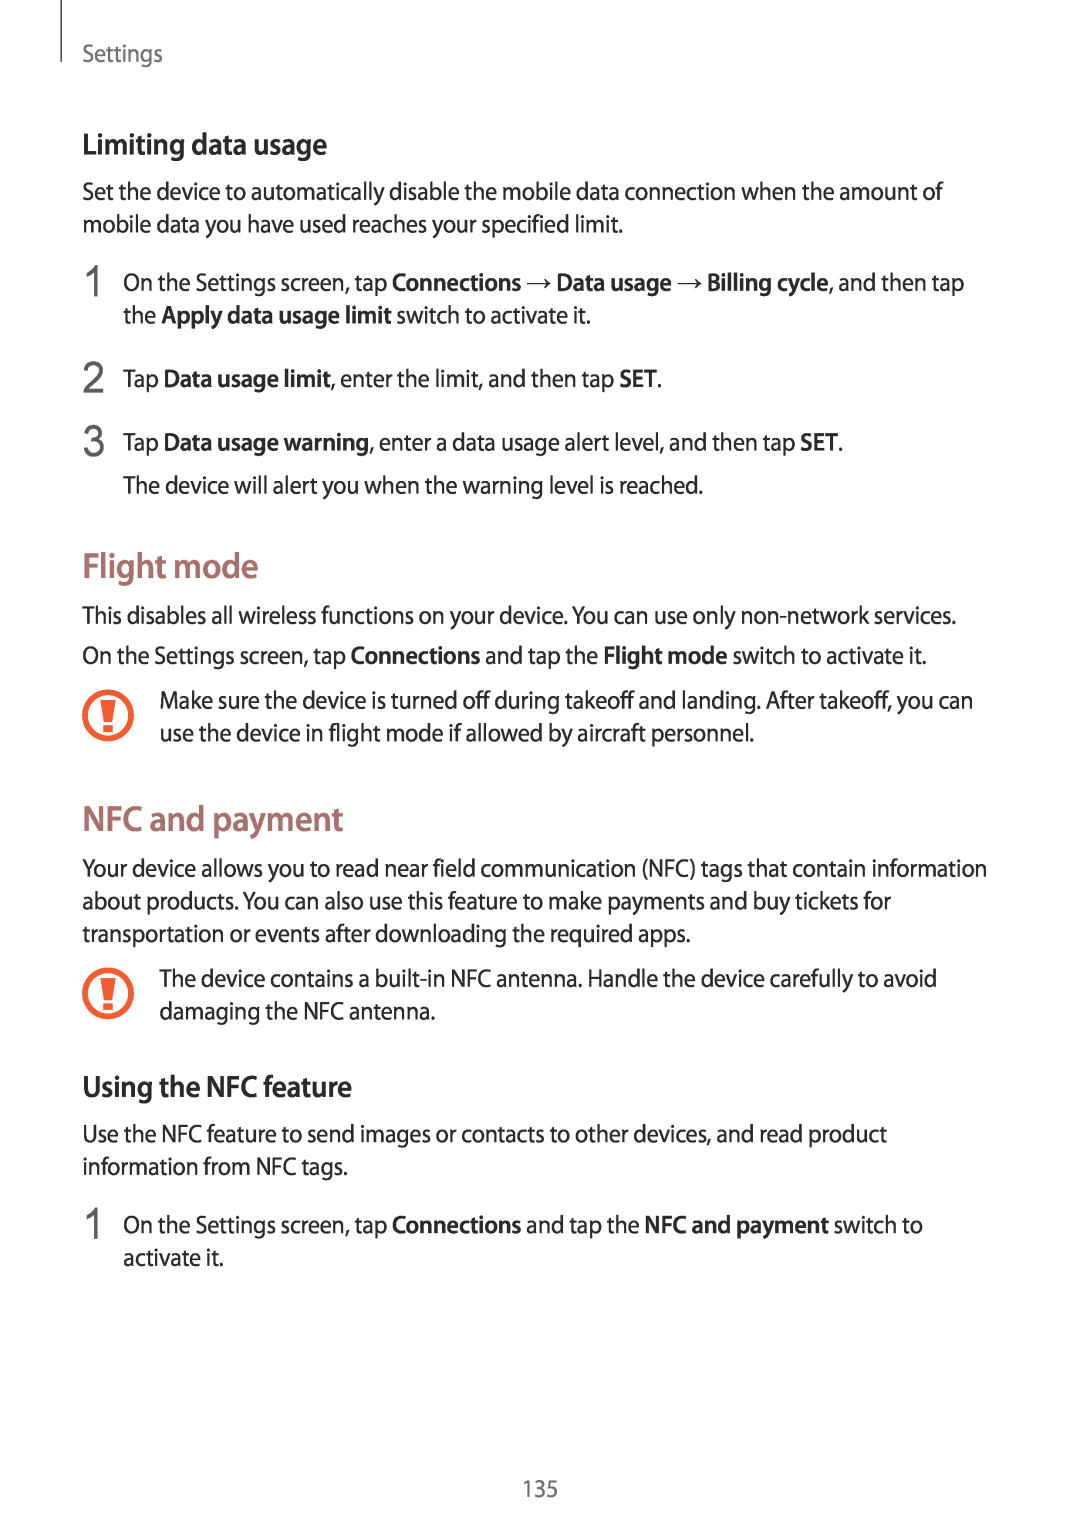 Samsung SM-G928FZKEORX, SM-G925FZKADBT Flight mode, NFC and payment, Limiting data usage, Using the NFC feature, Settings 